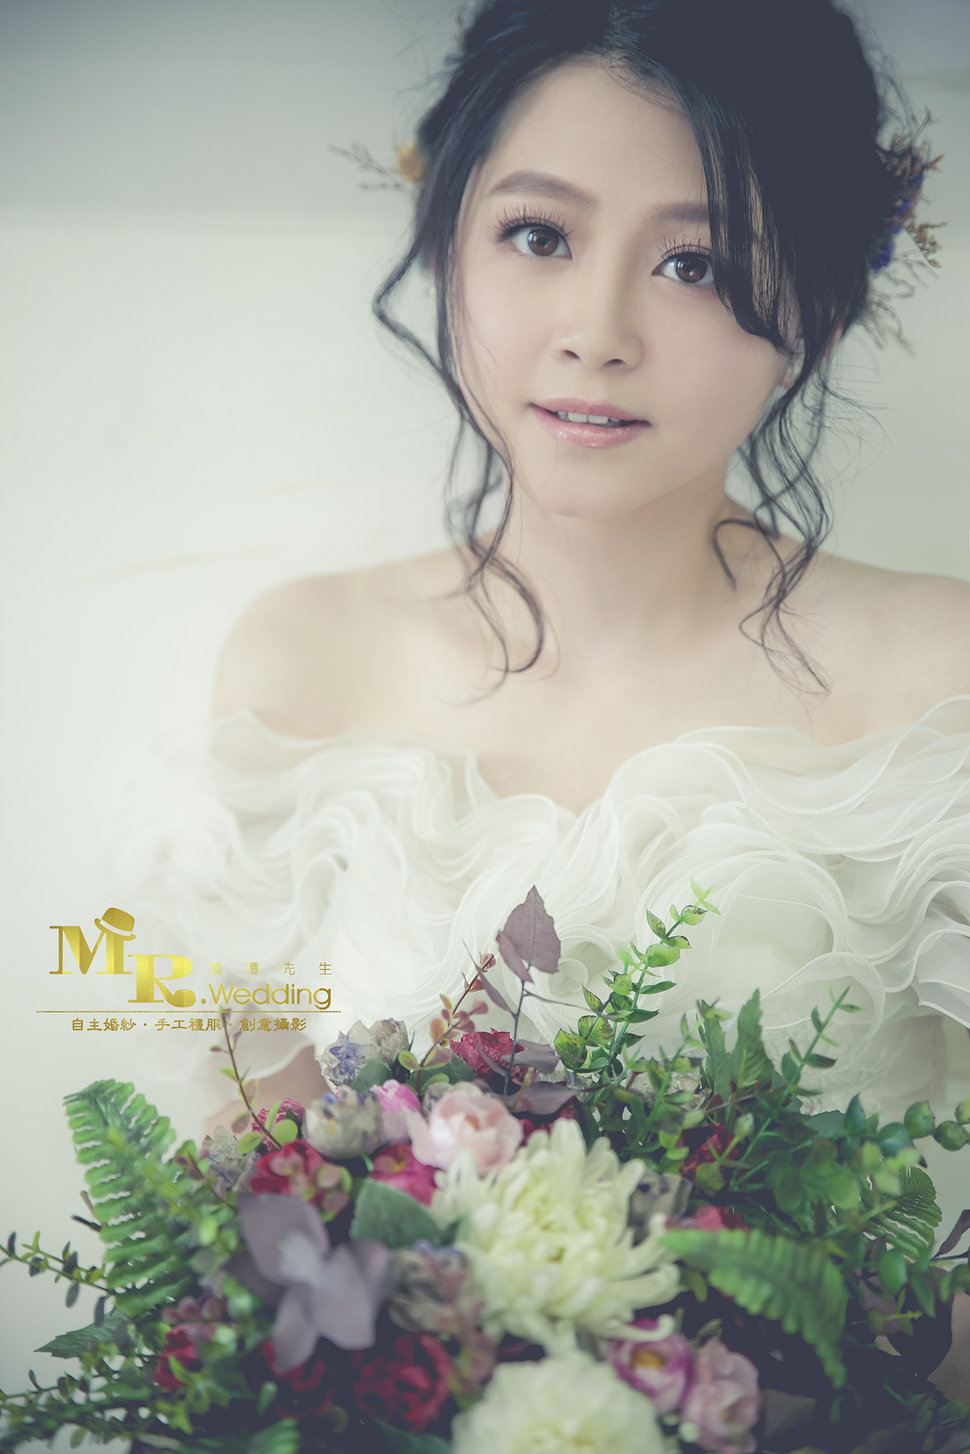 (11) - Mr.wedding婚禮先生婚紗故事館《結婚吧》